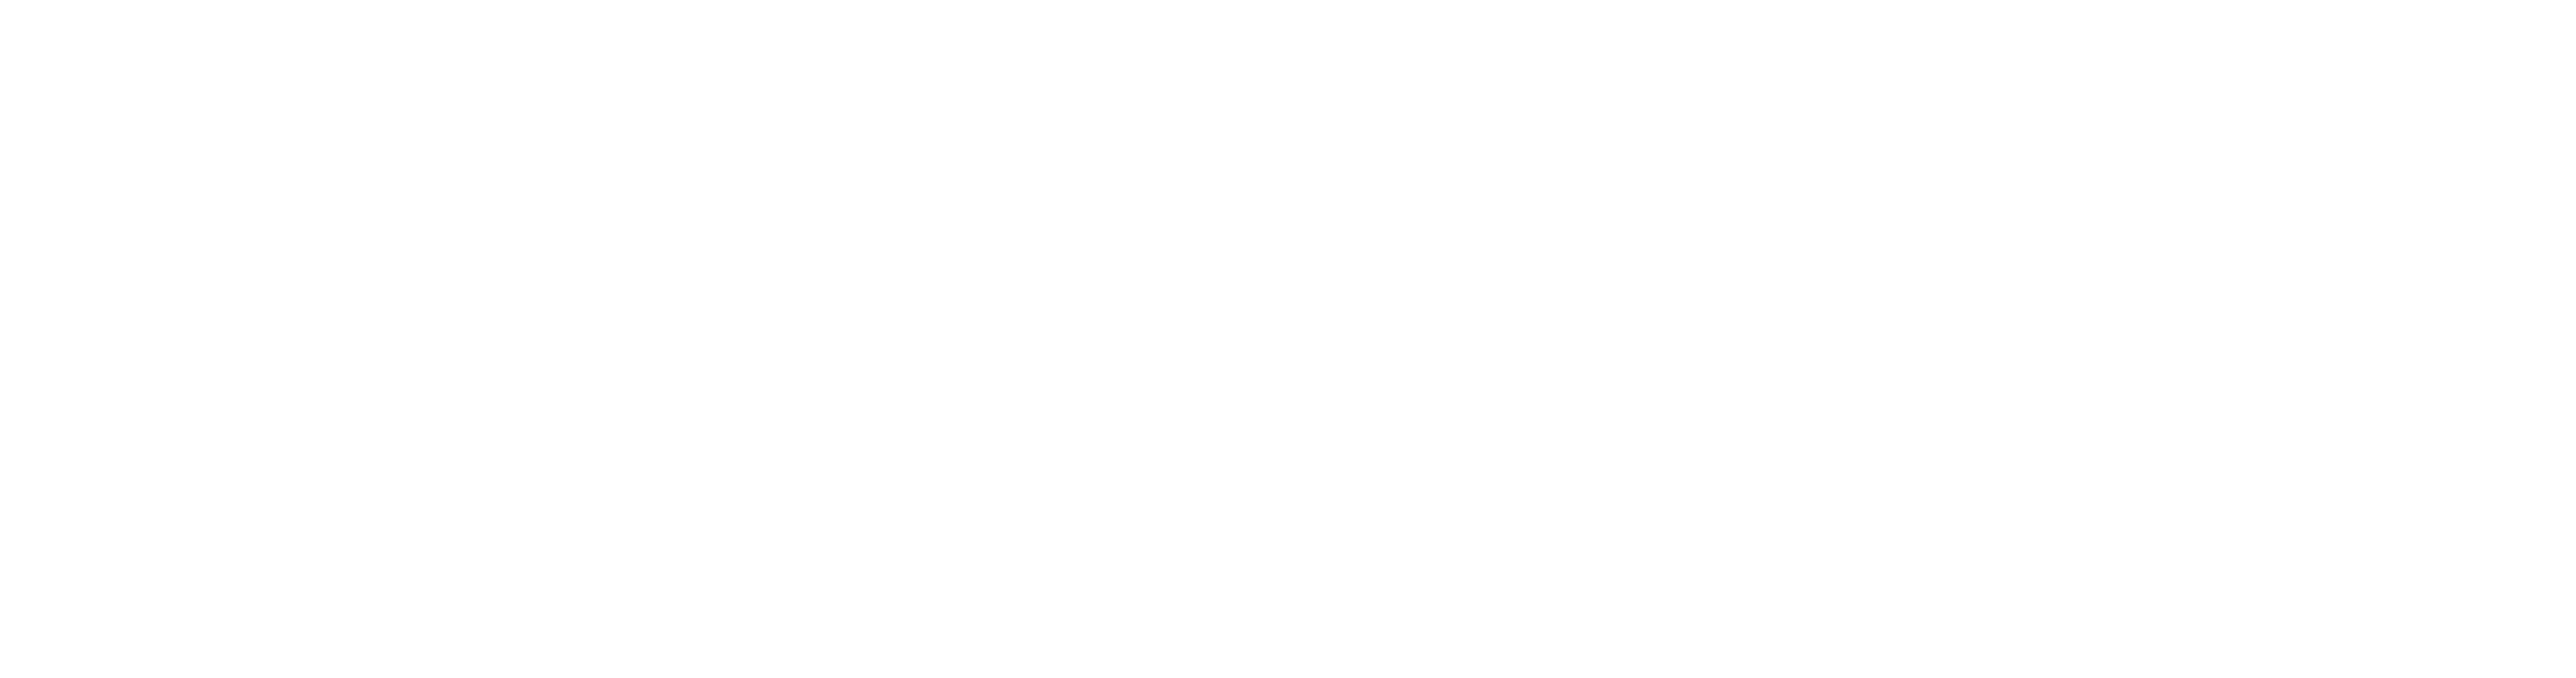 The Promised Neverland logo